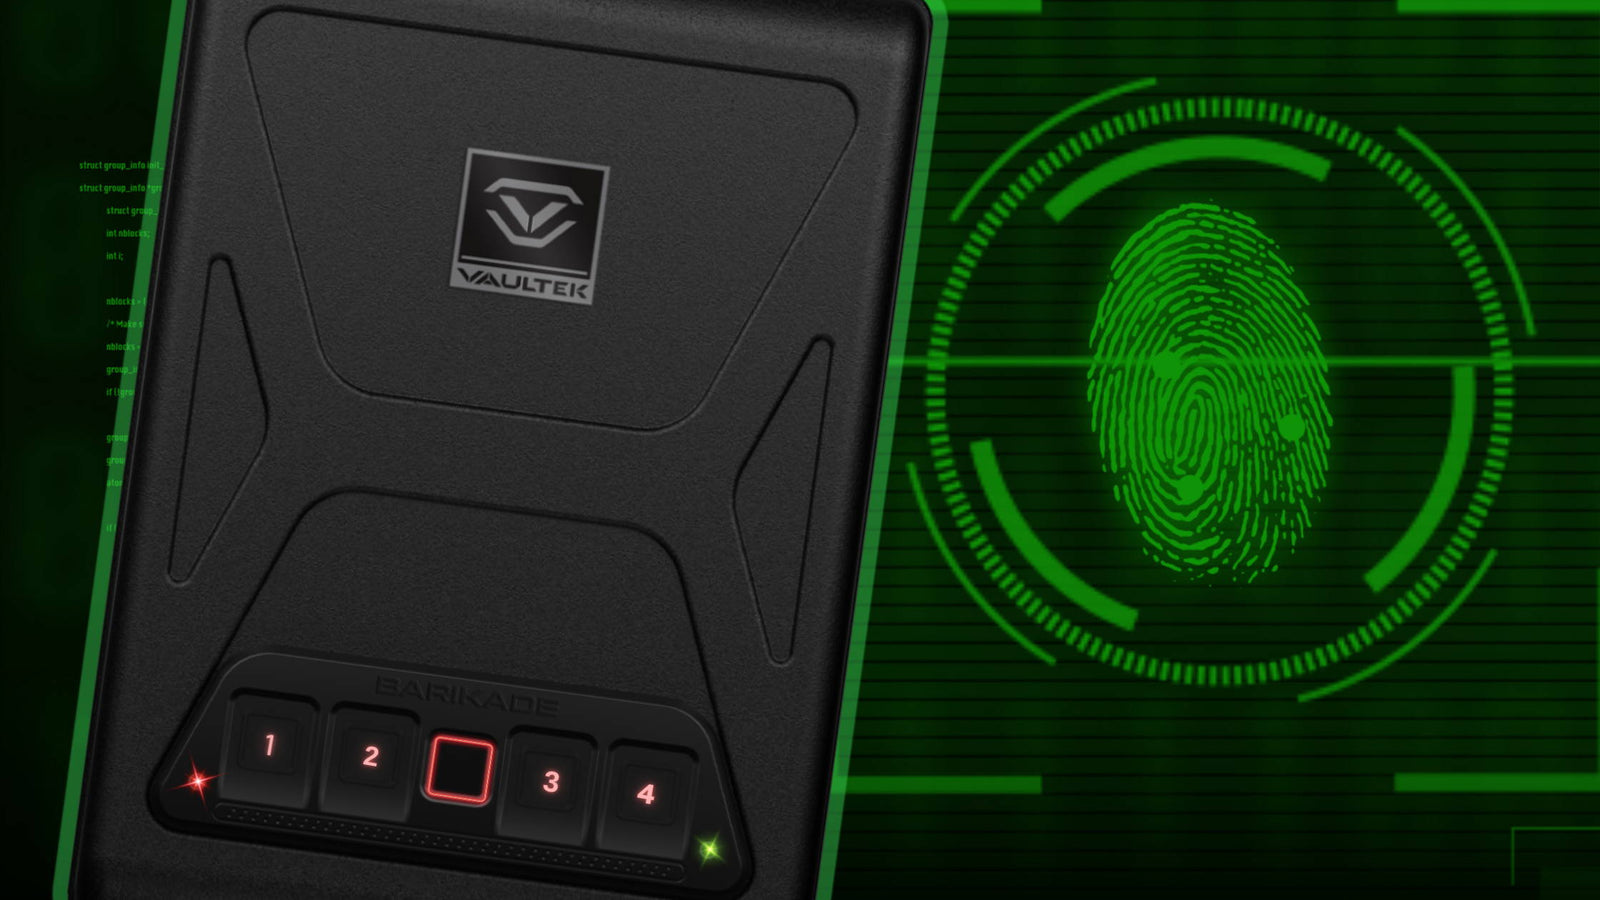 Vaultek Barikade Series 1 Biometric Safe Review